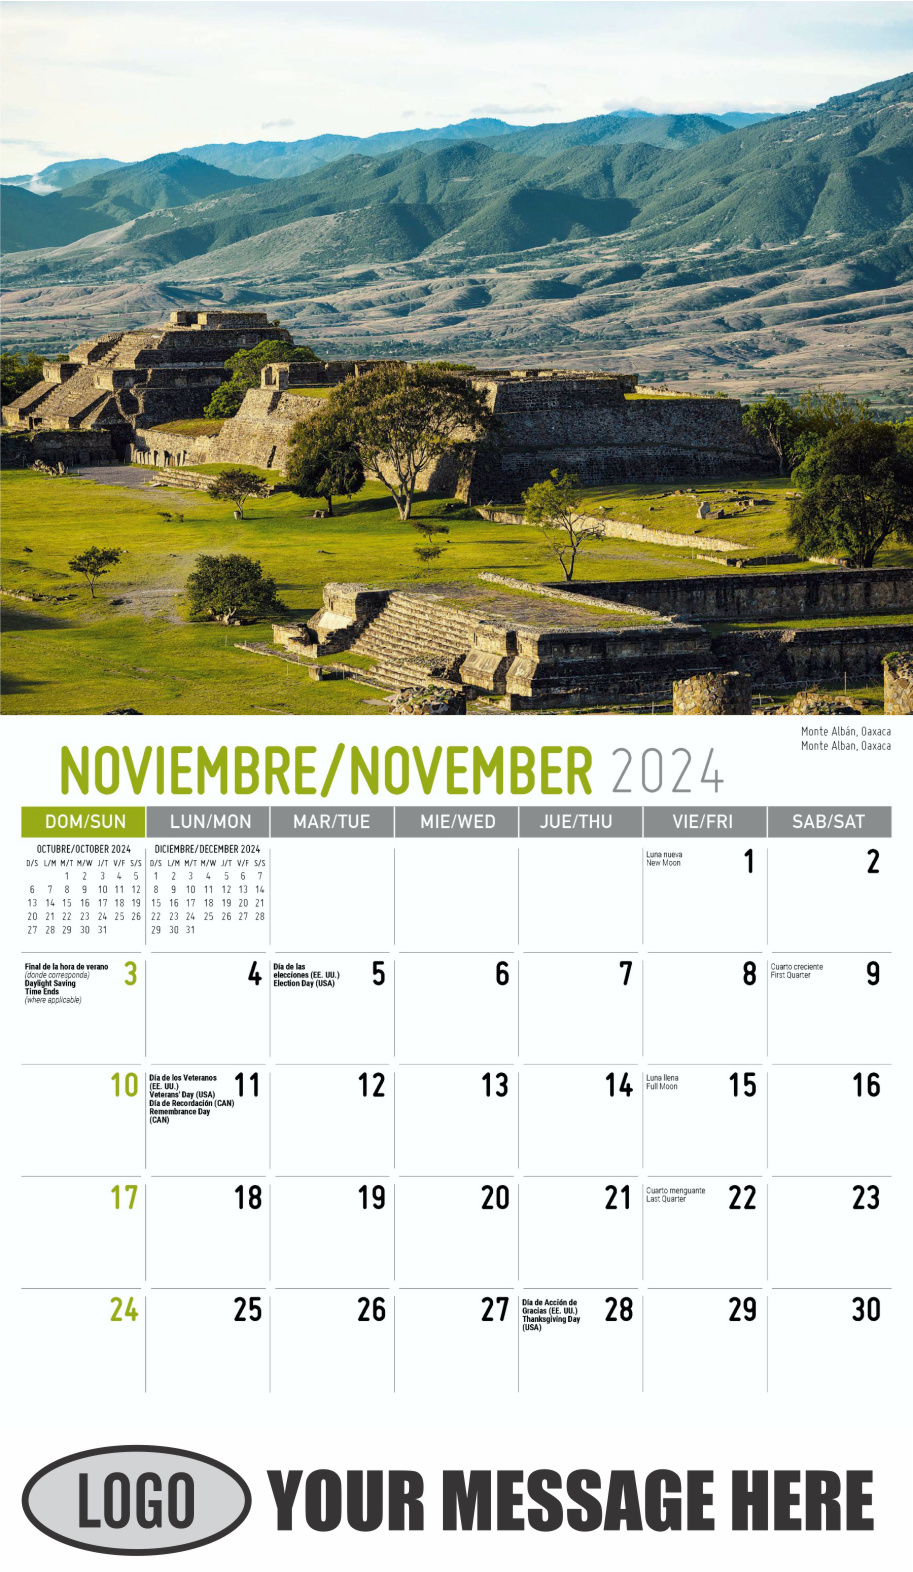 Scenes of Mexico 2024 Bilingual Business Promo Calendar - November